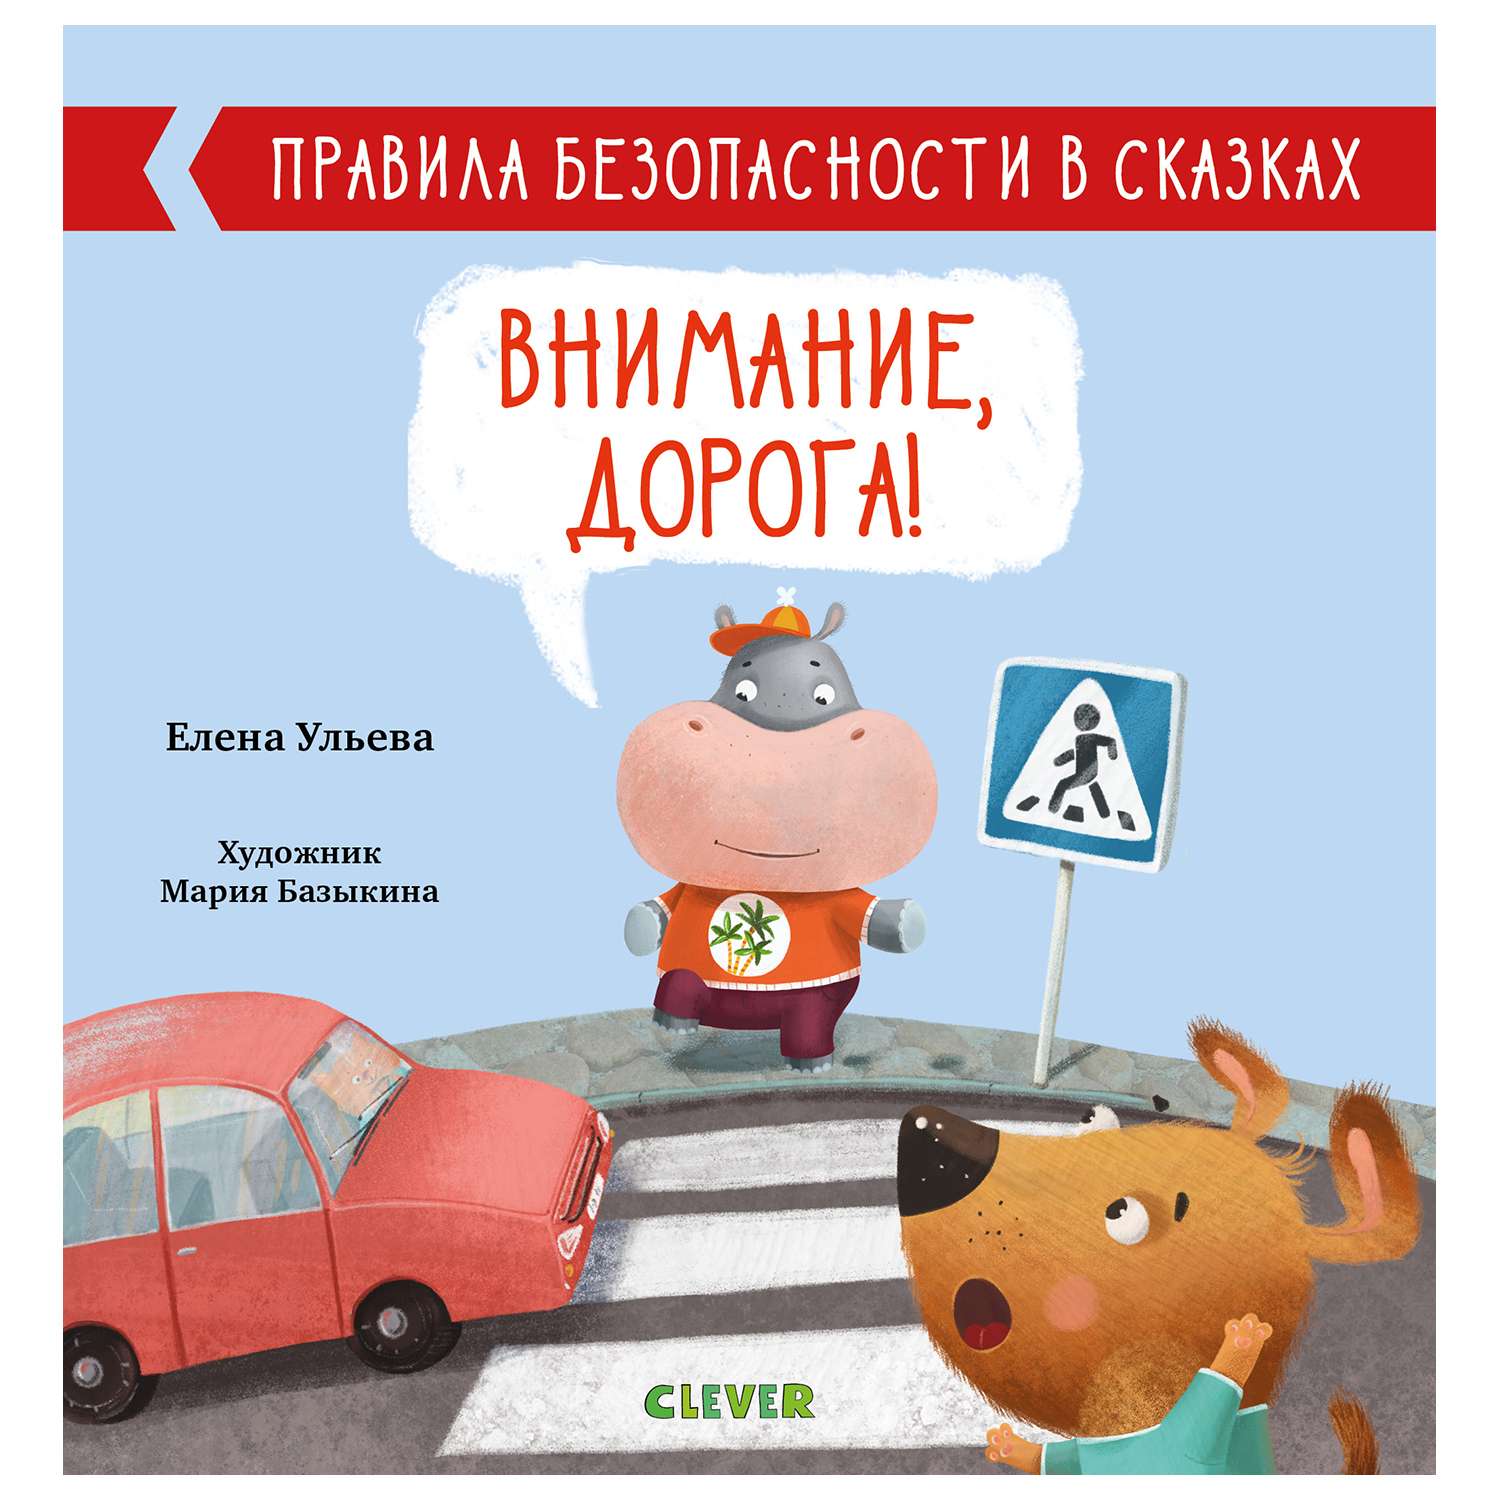 Книга Clever Правила безопасности в сказках Внимание дорога Ульева Е - фото 1